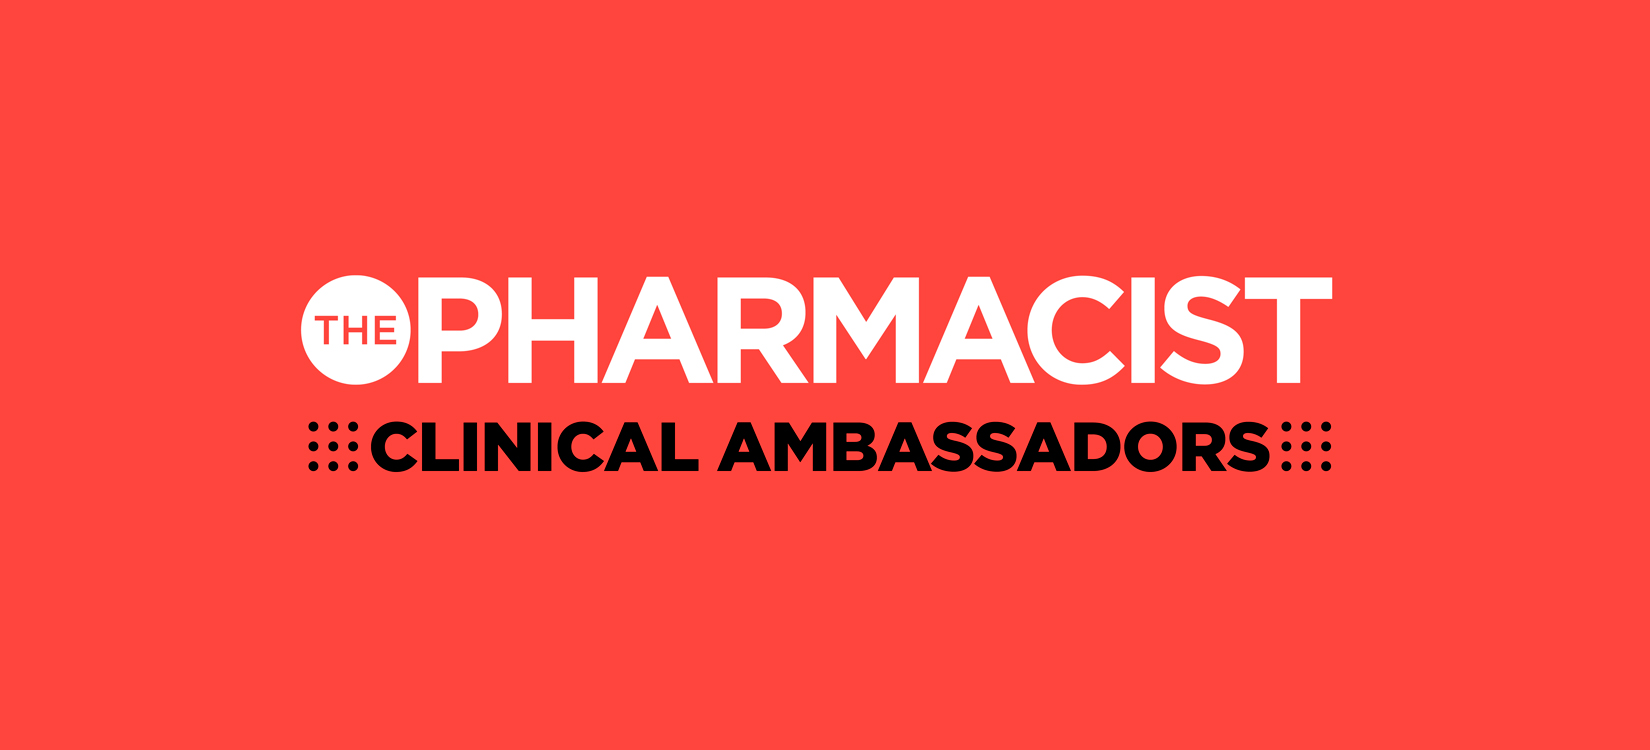 Key milestone for The Pharmacist’s Clinical Ambassadors